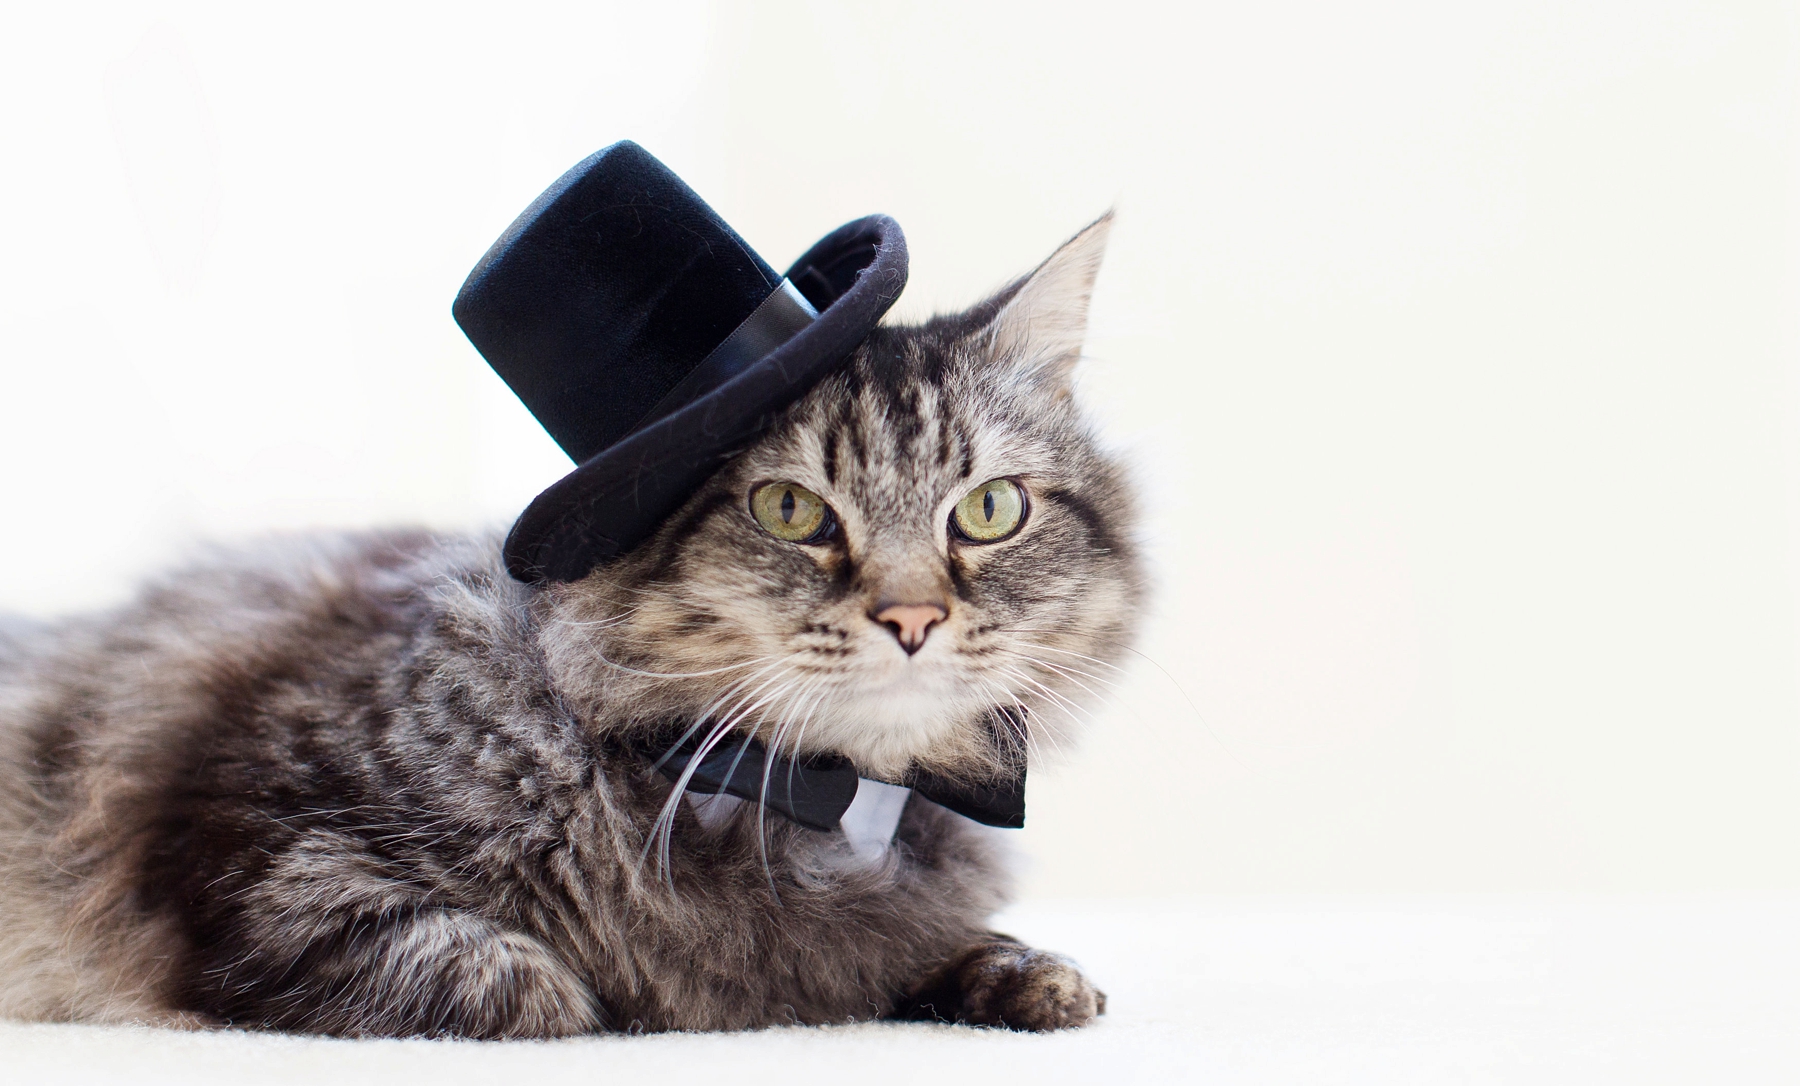 Cat in a tuxedo by Elle Danielle Photography